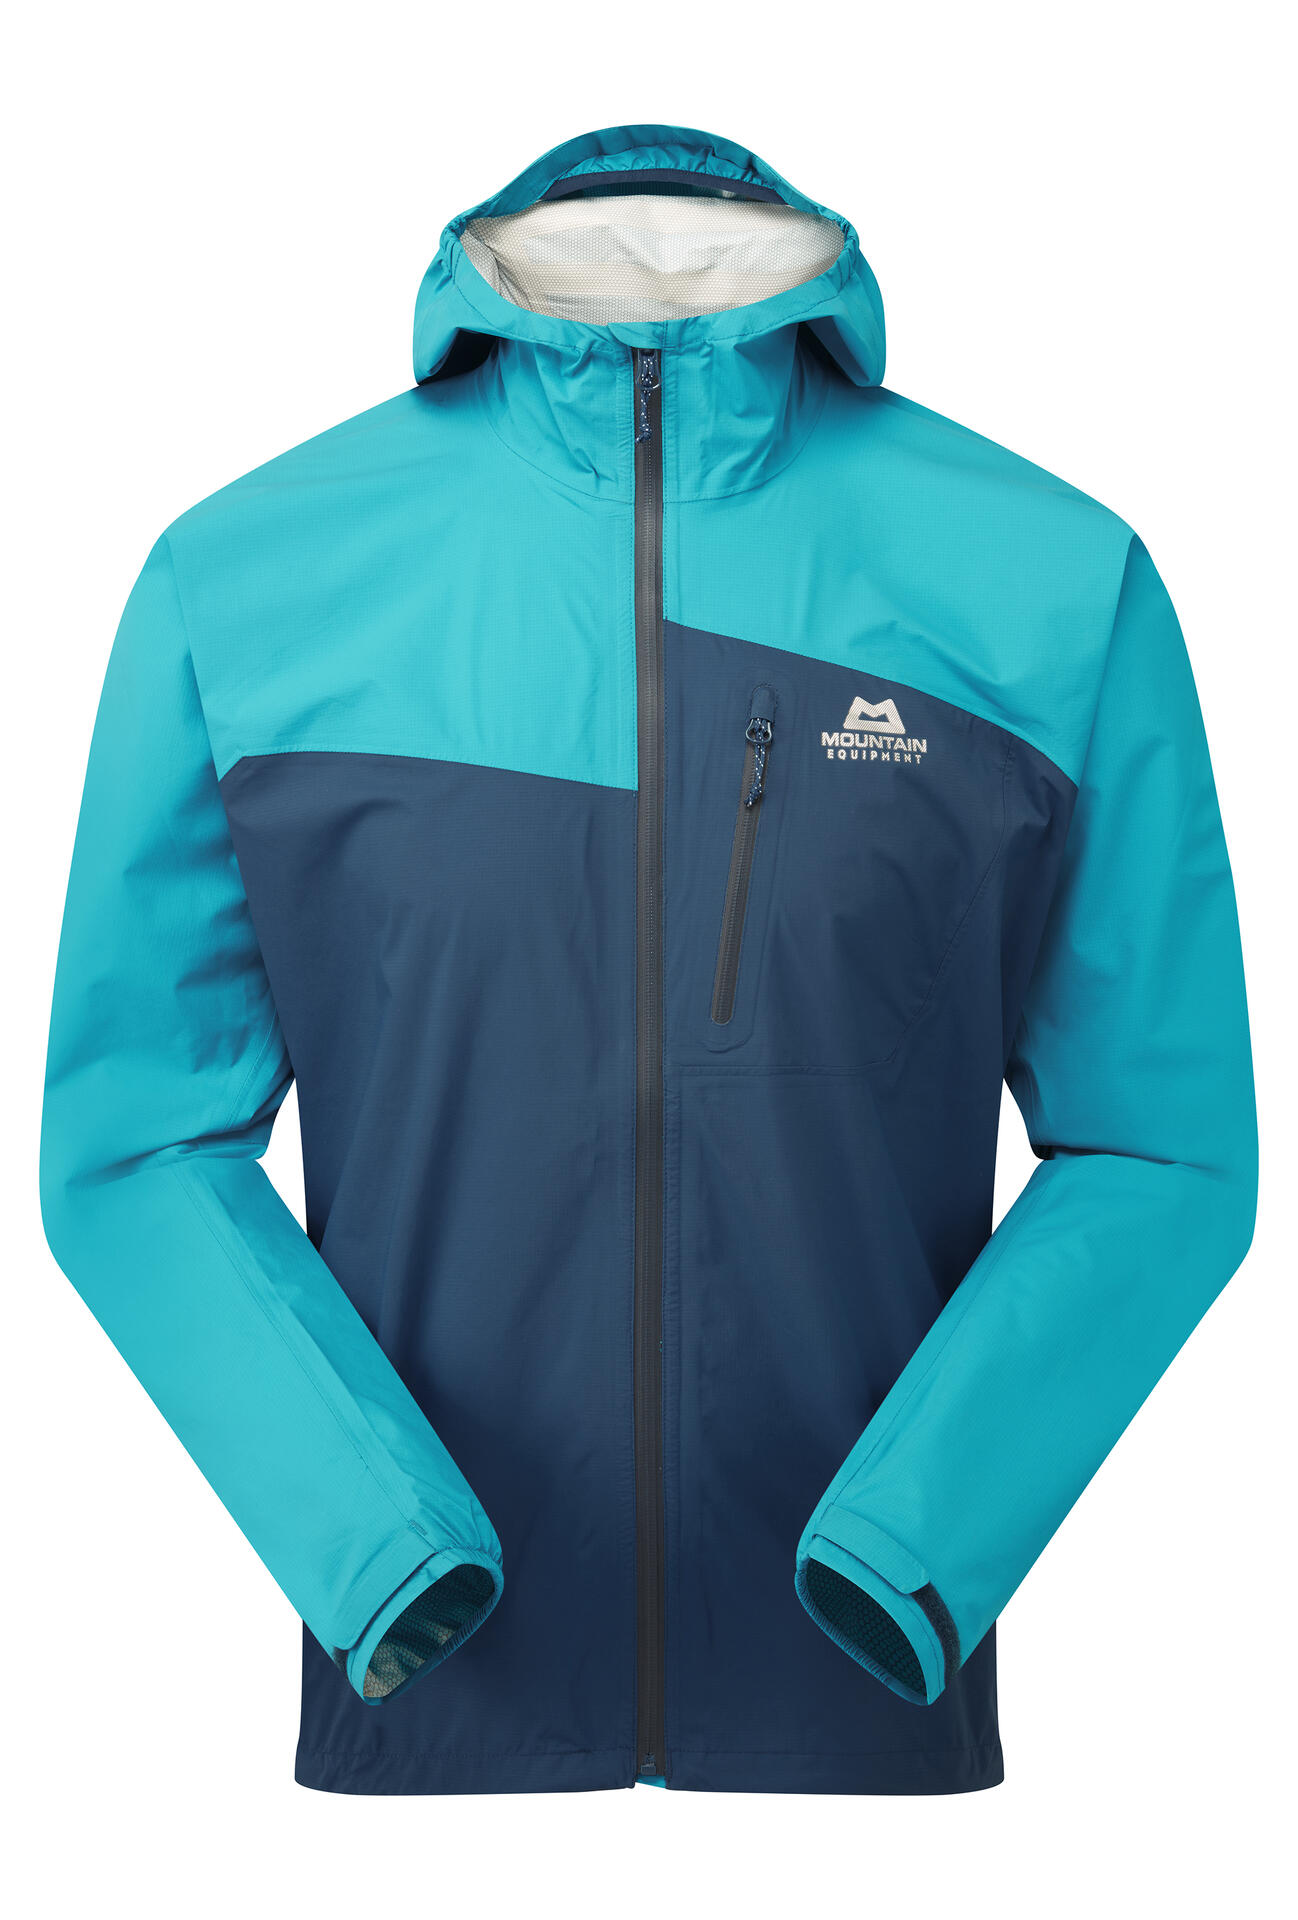 Mountain Equipment Katam Jacket Men'S Barva: Majolica Blue/Topaz, Velikost: L